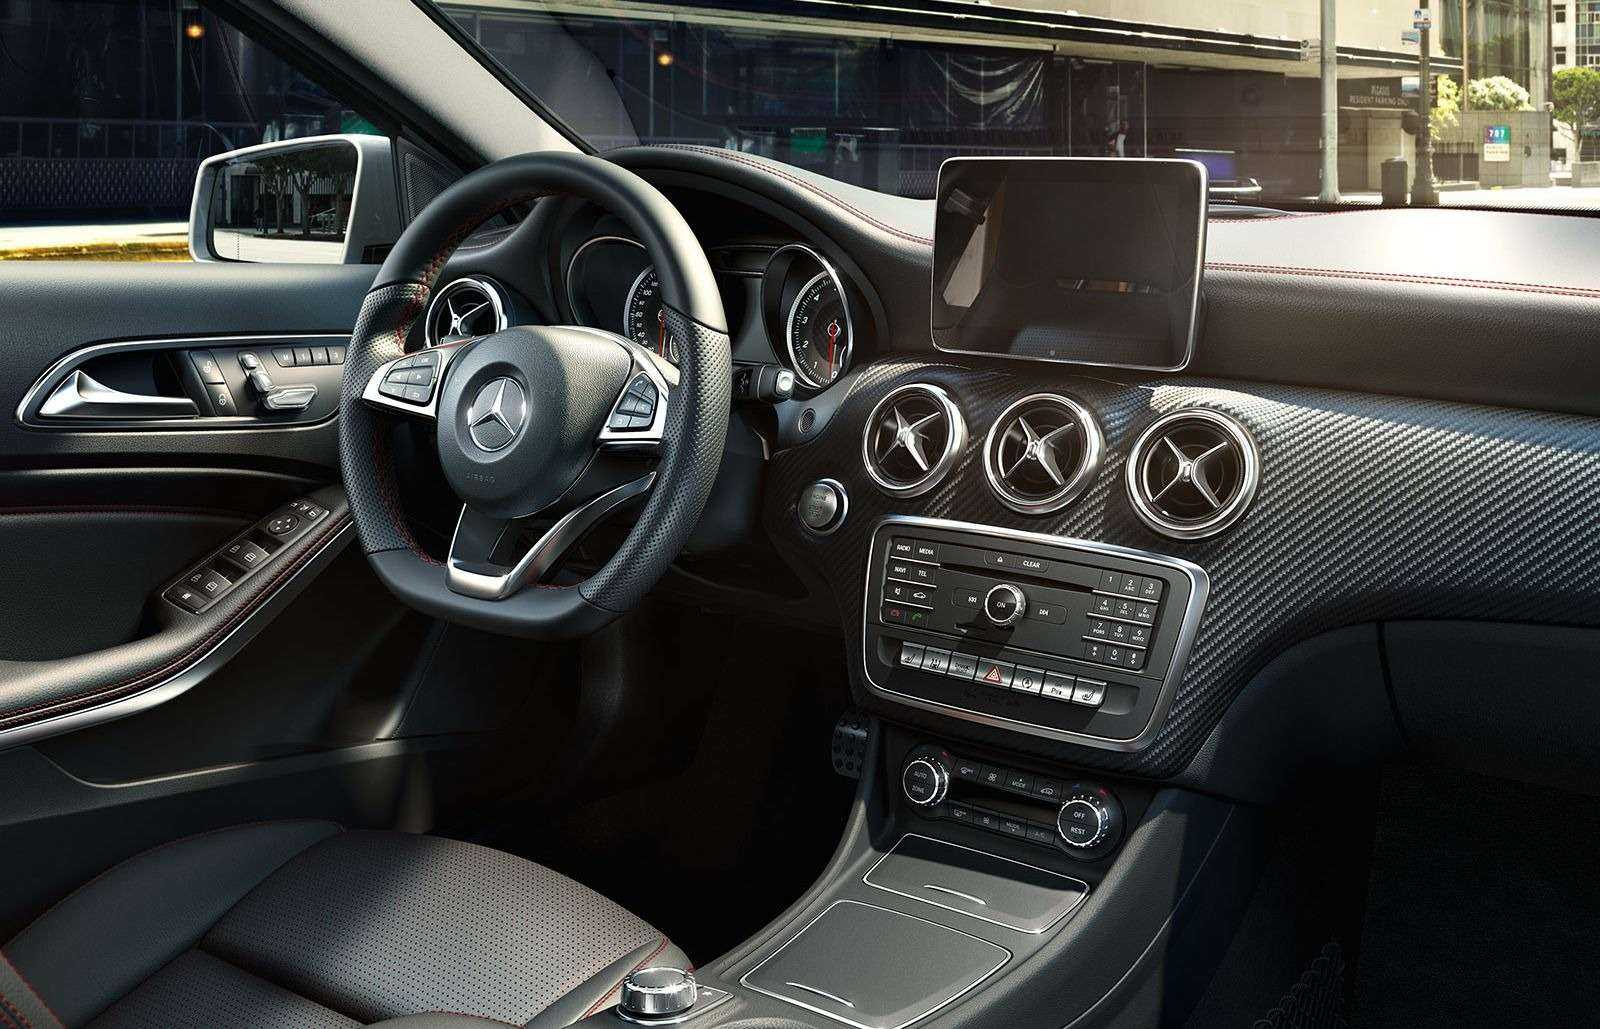 Mercedes-benz a-klasse (мерседес-бенз a-klasse) 2022 - обзор модели c фото и видео